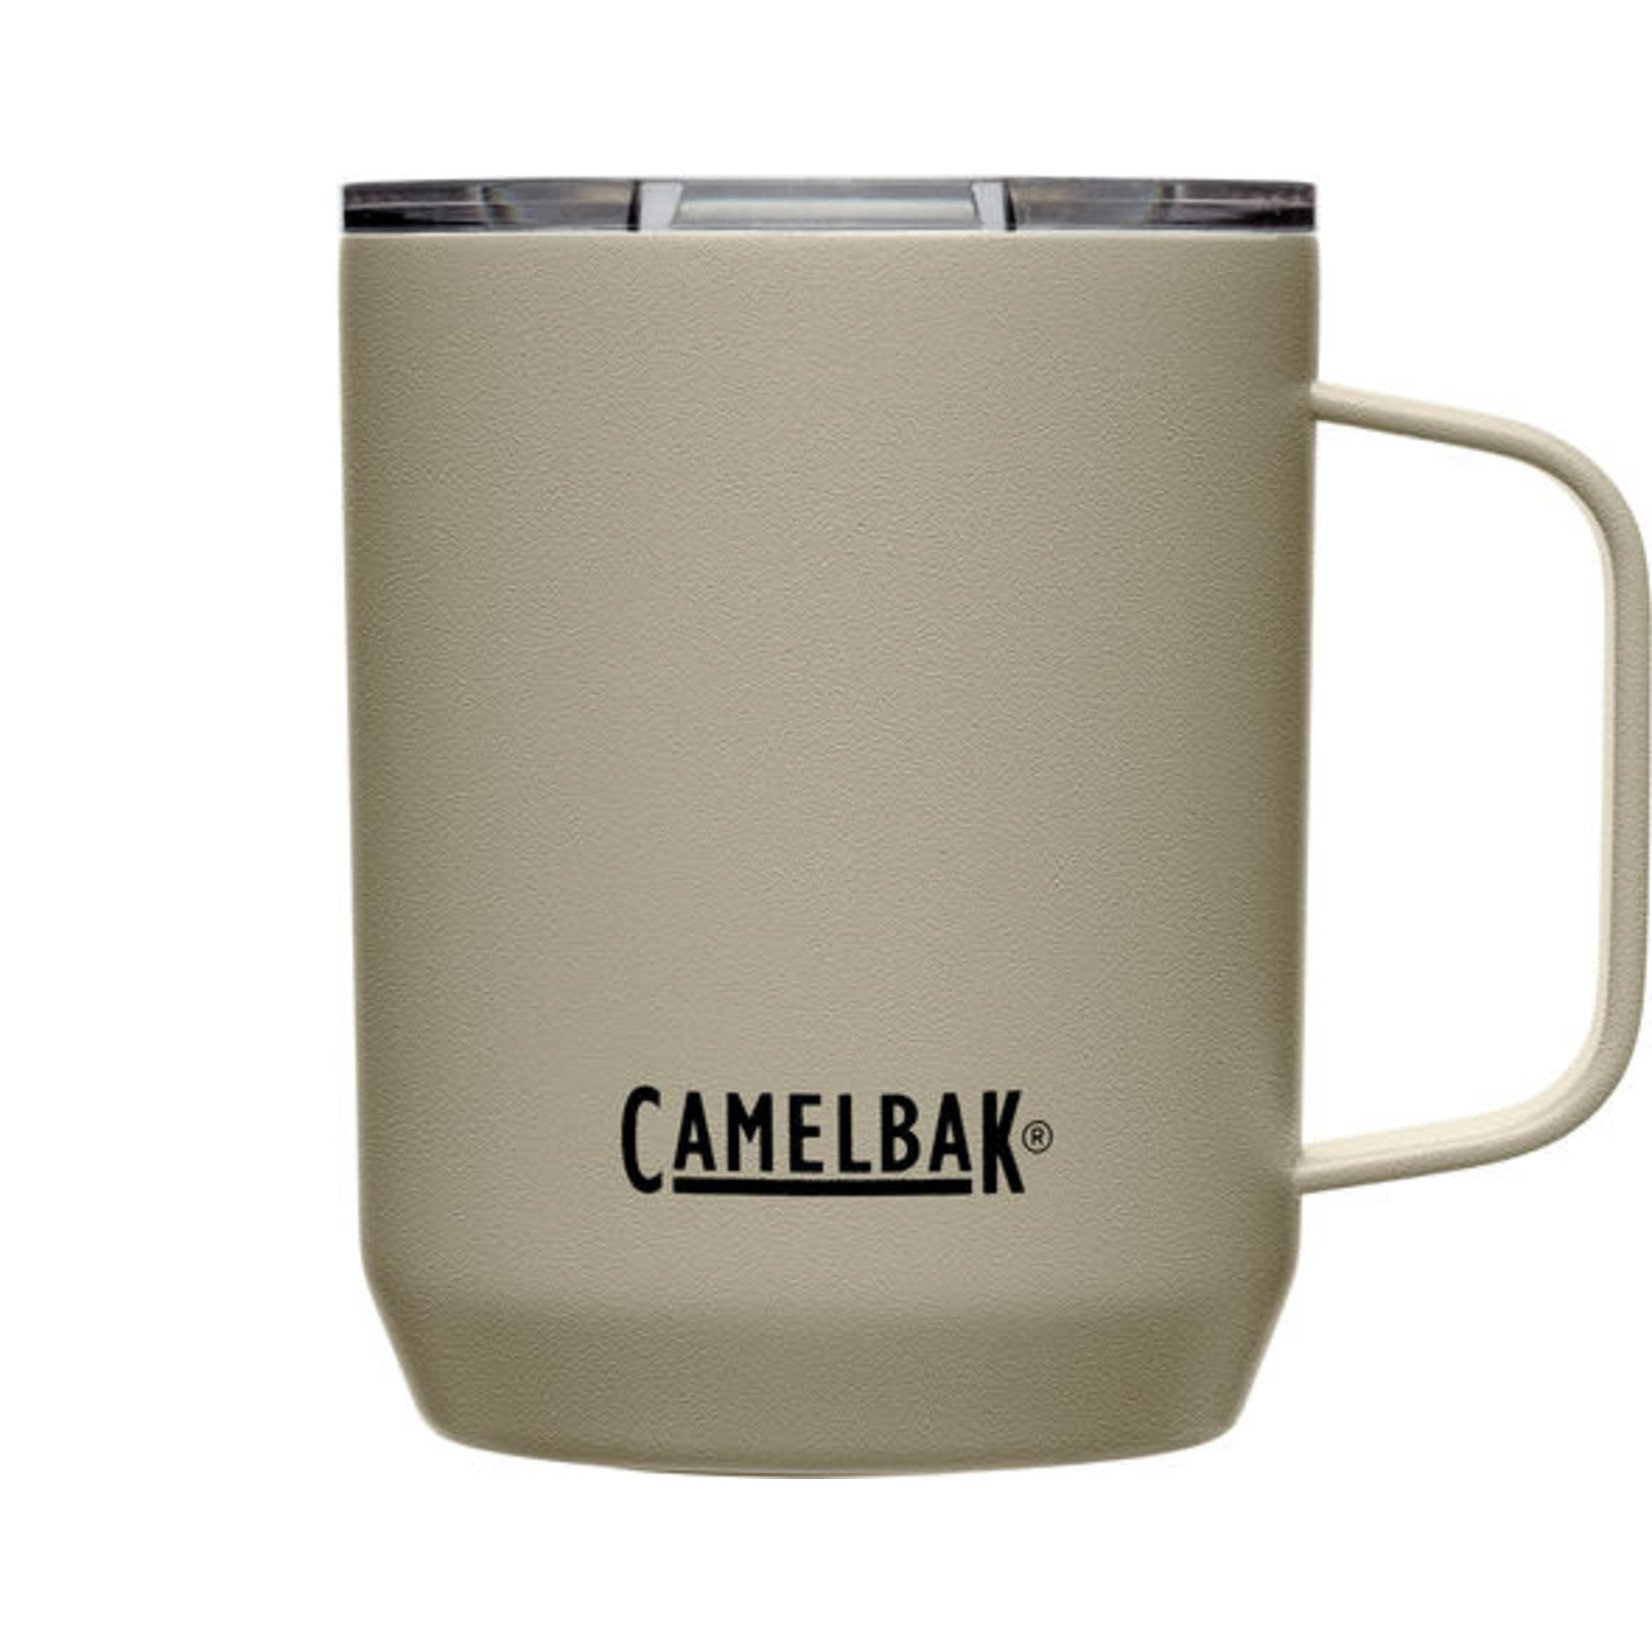 Camelbak Camelbak Horizon 12 oz Camp Mug, Insulated Stainless Steel